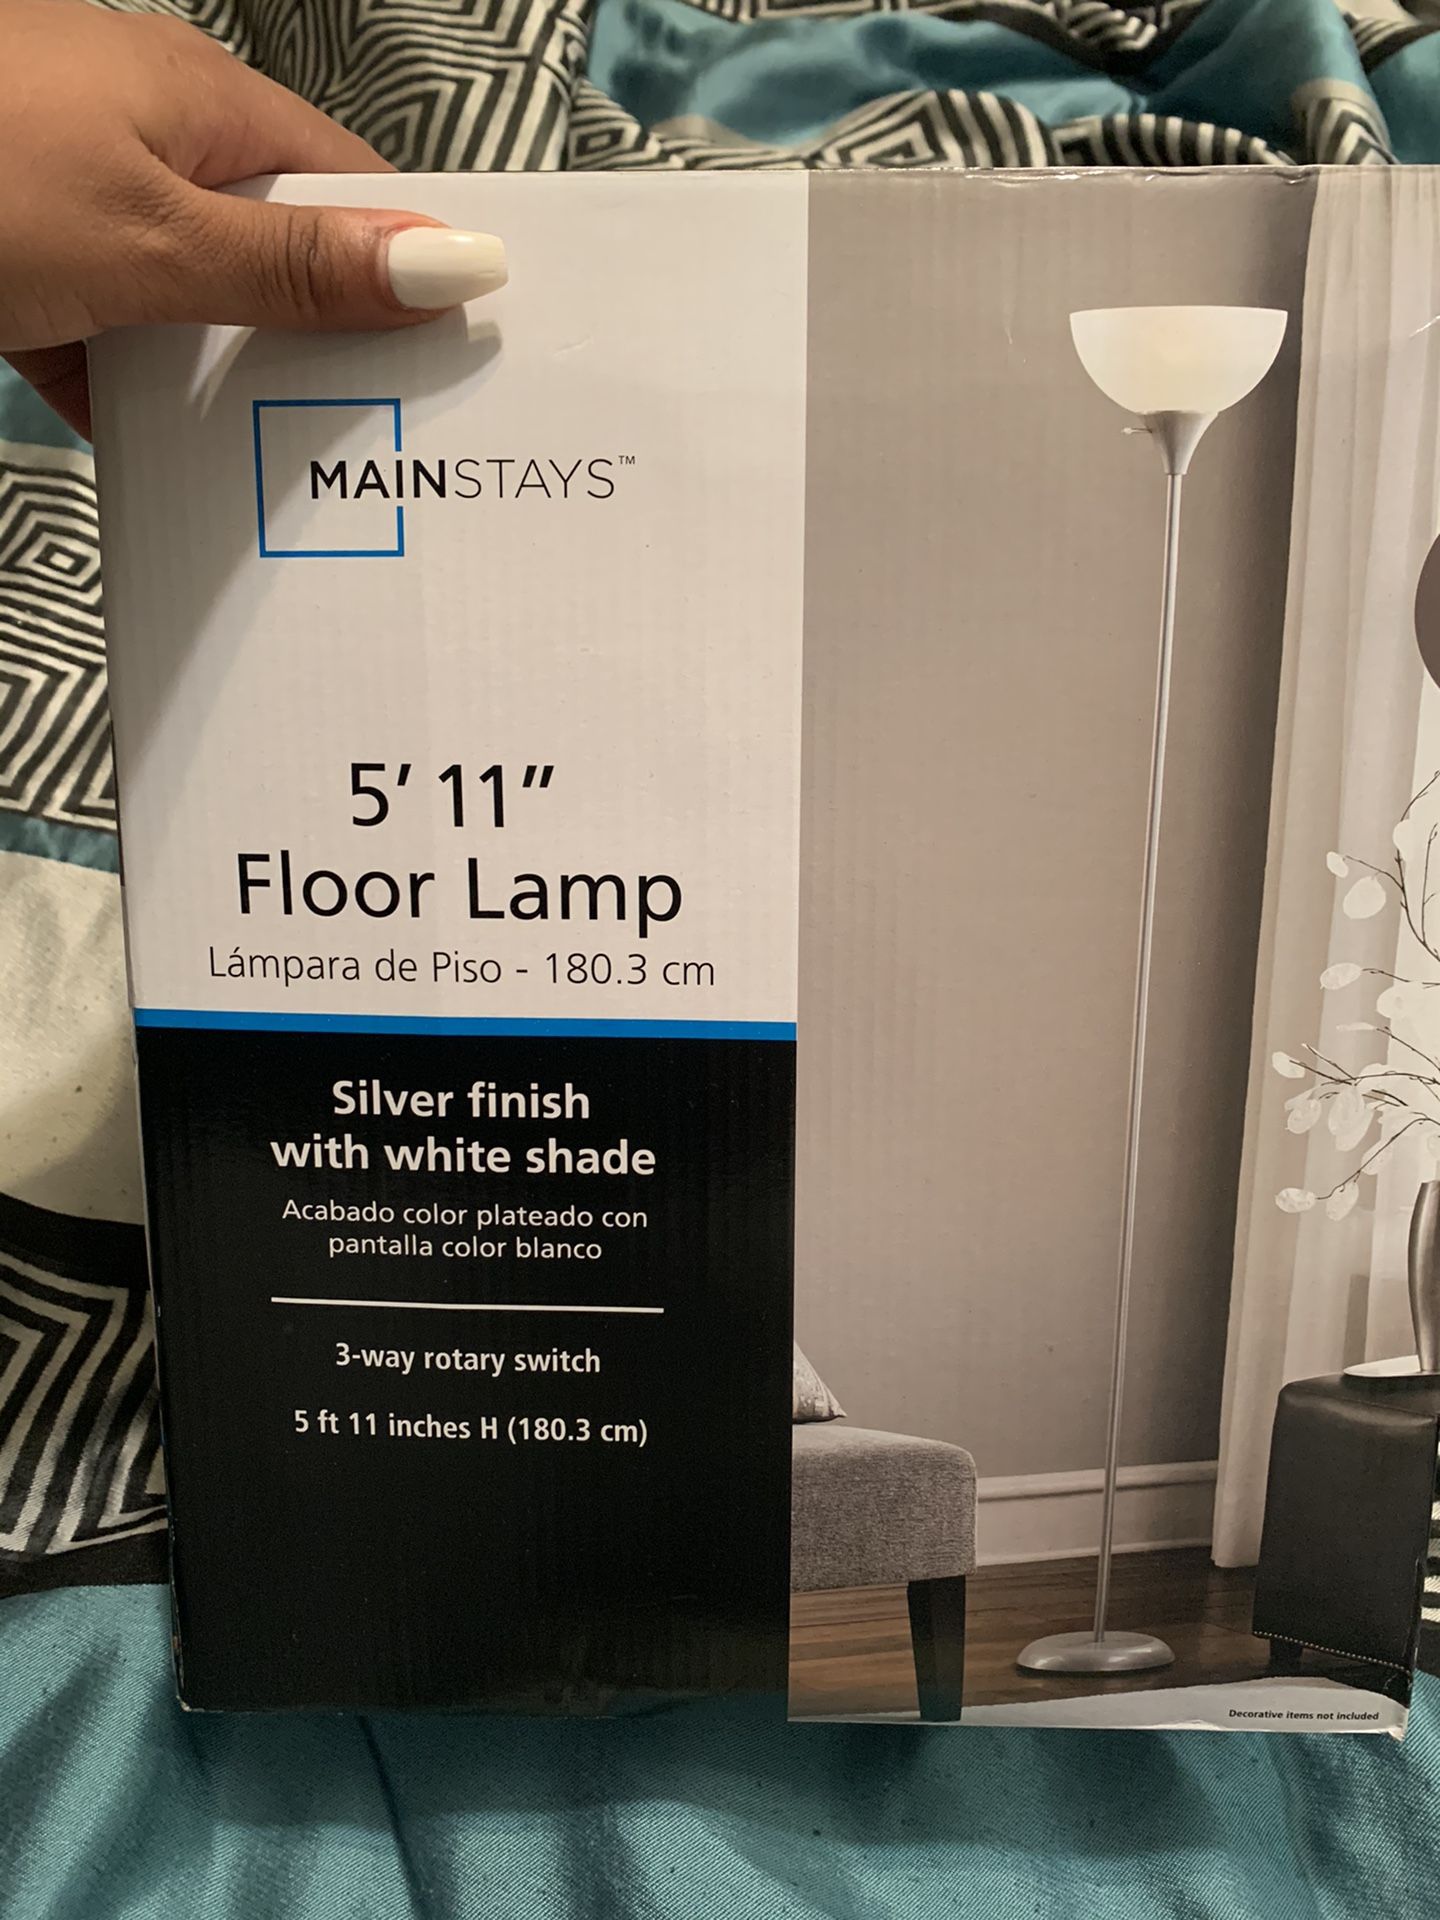 Brand new floor lamp